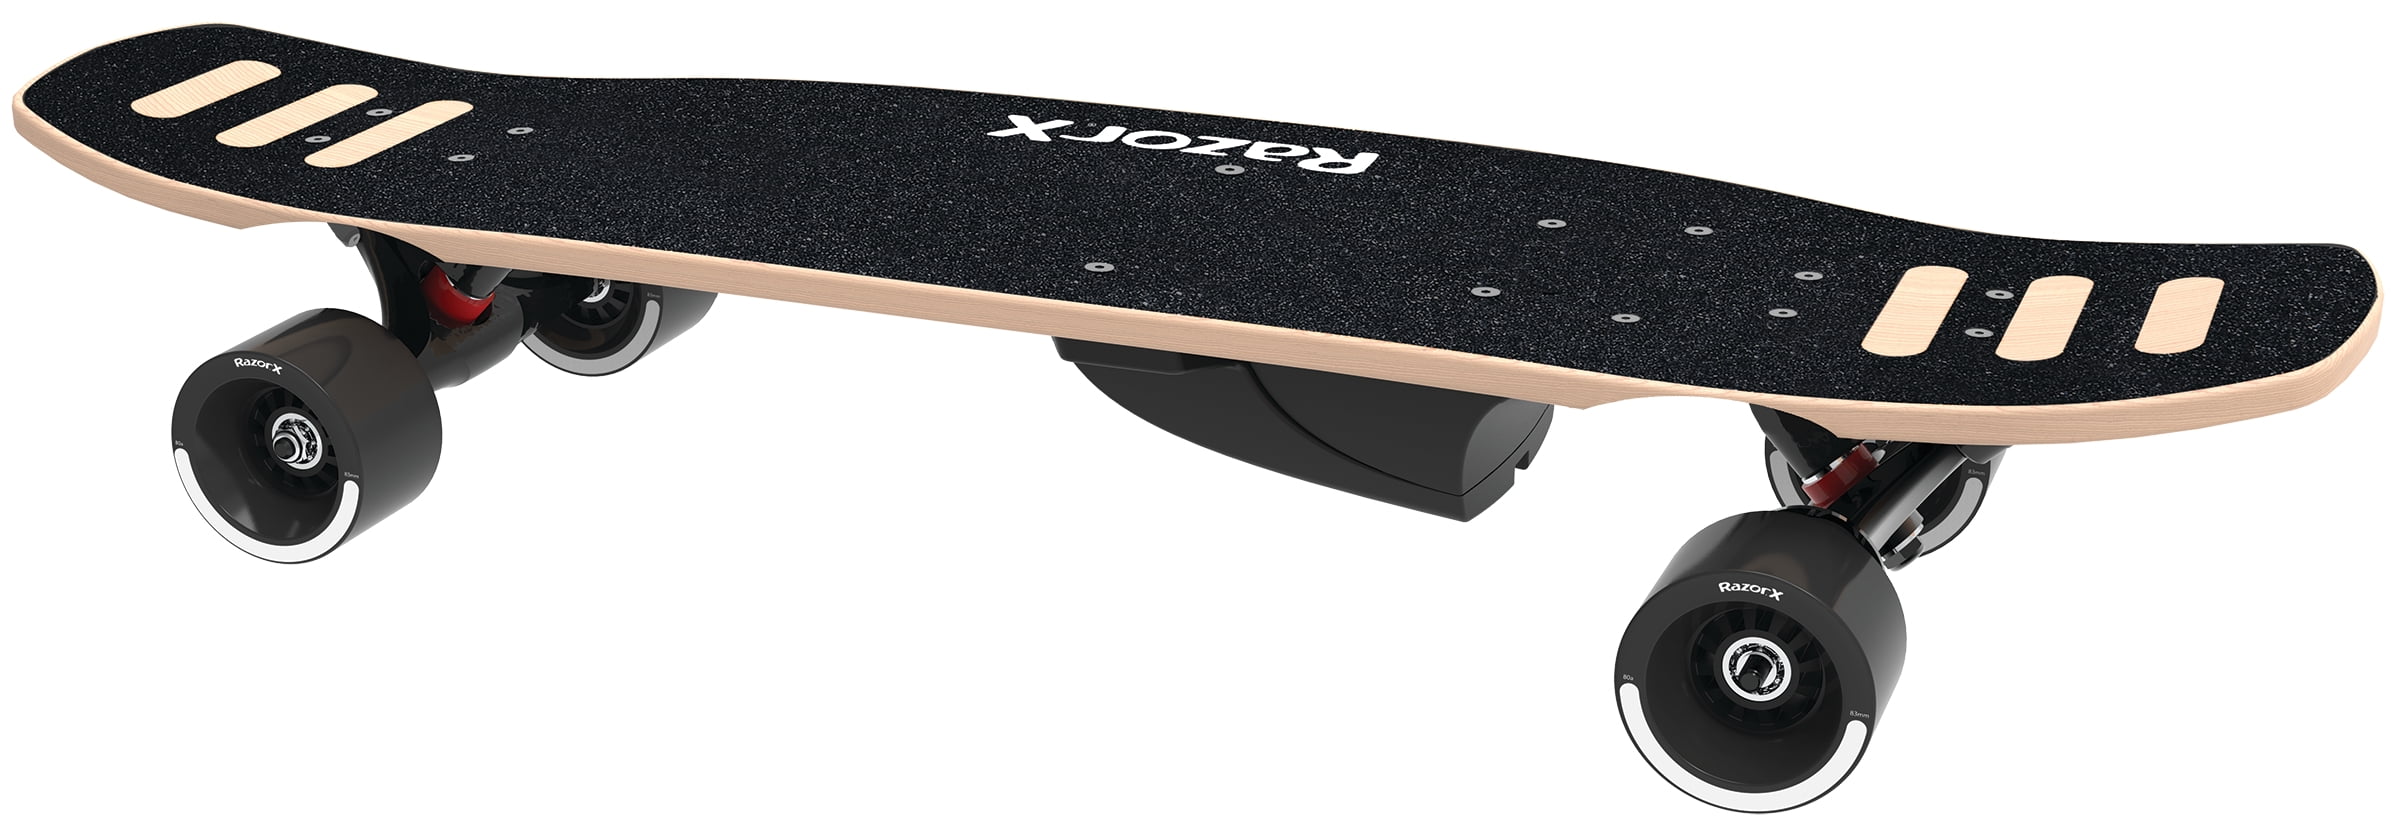 RazorX Longboard, Skateboard eléctrico